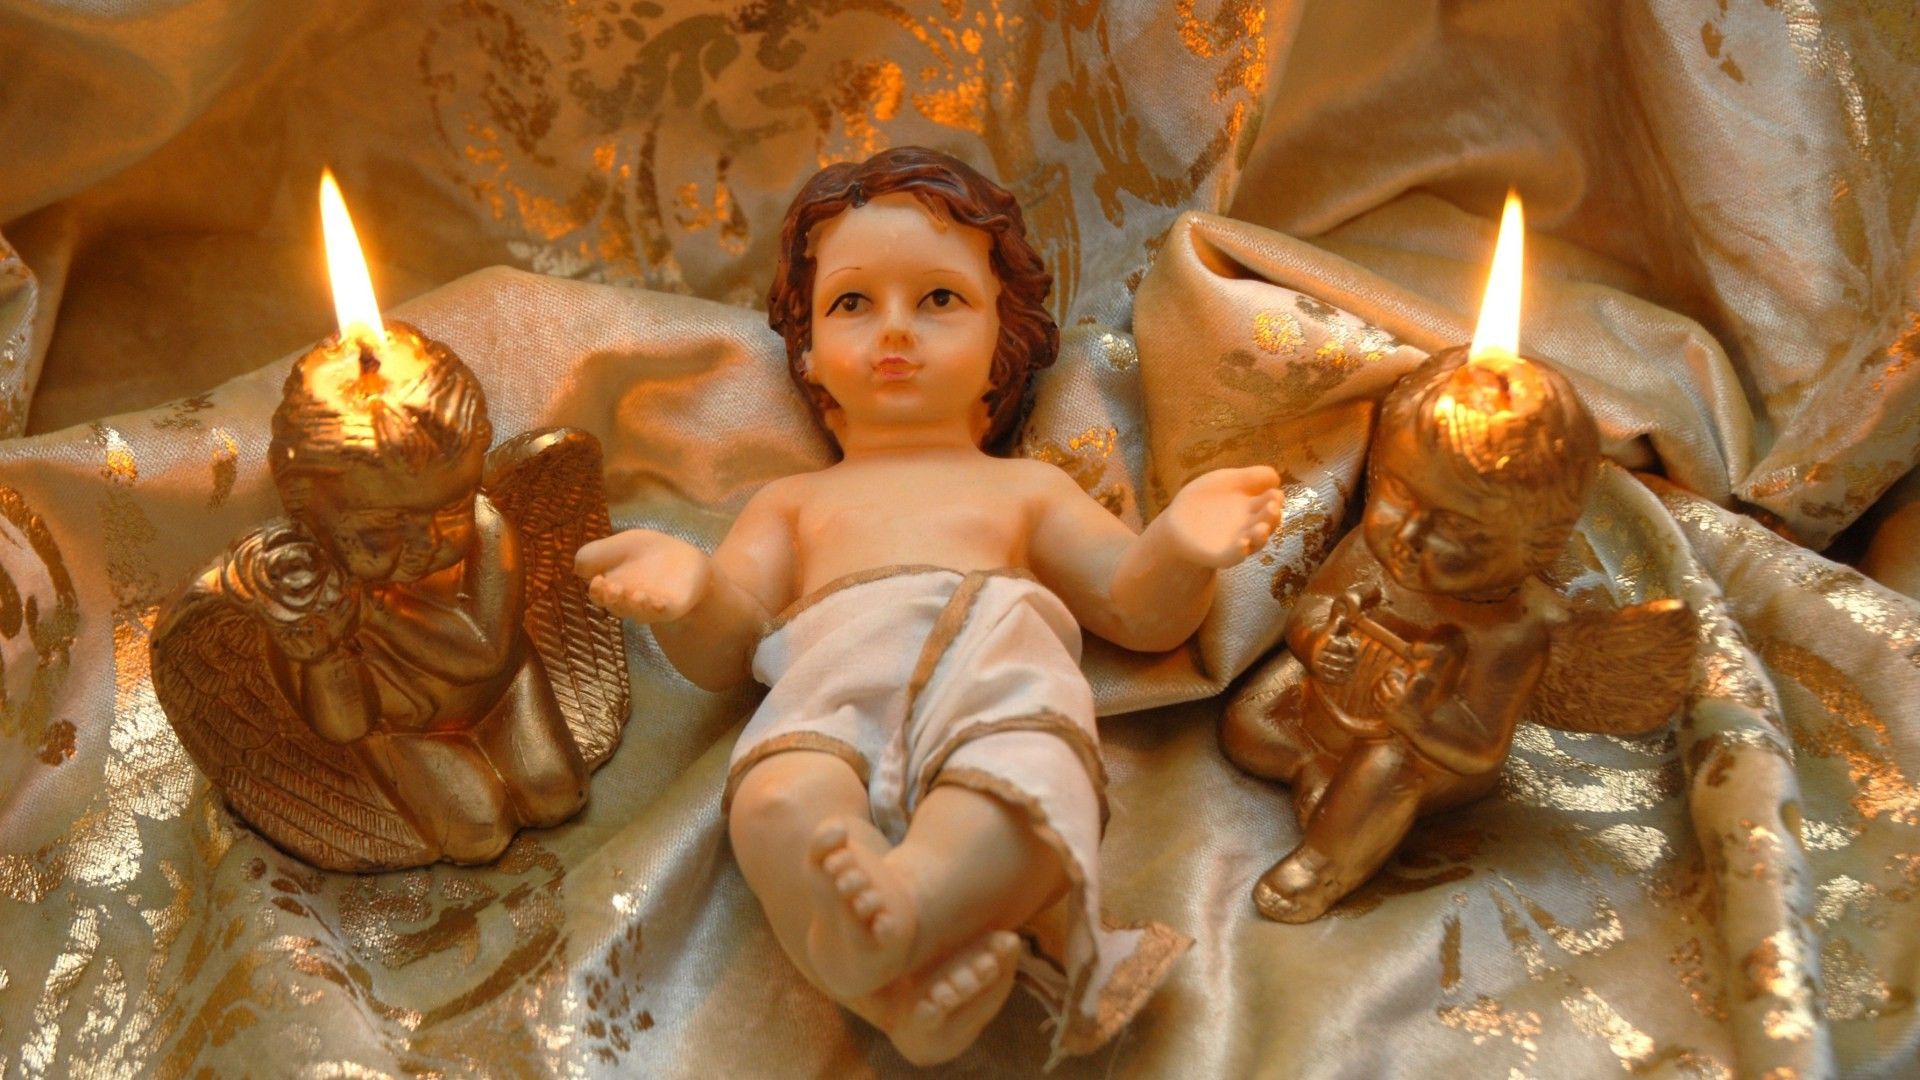 7595 Infant Jesus Images Stock Photos  Vectors  Shutterstock